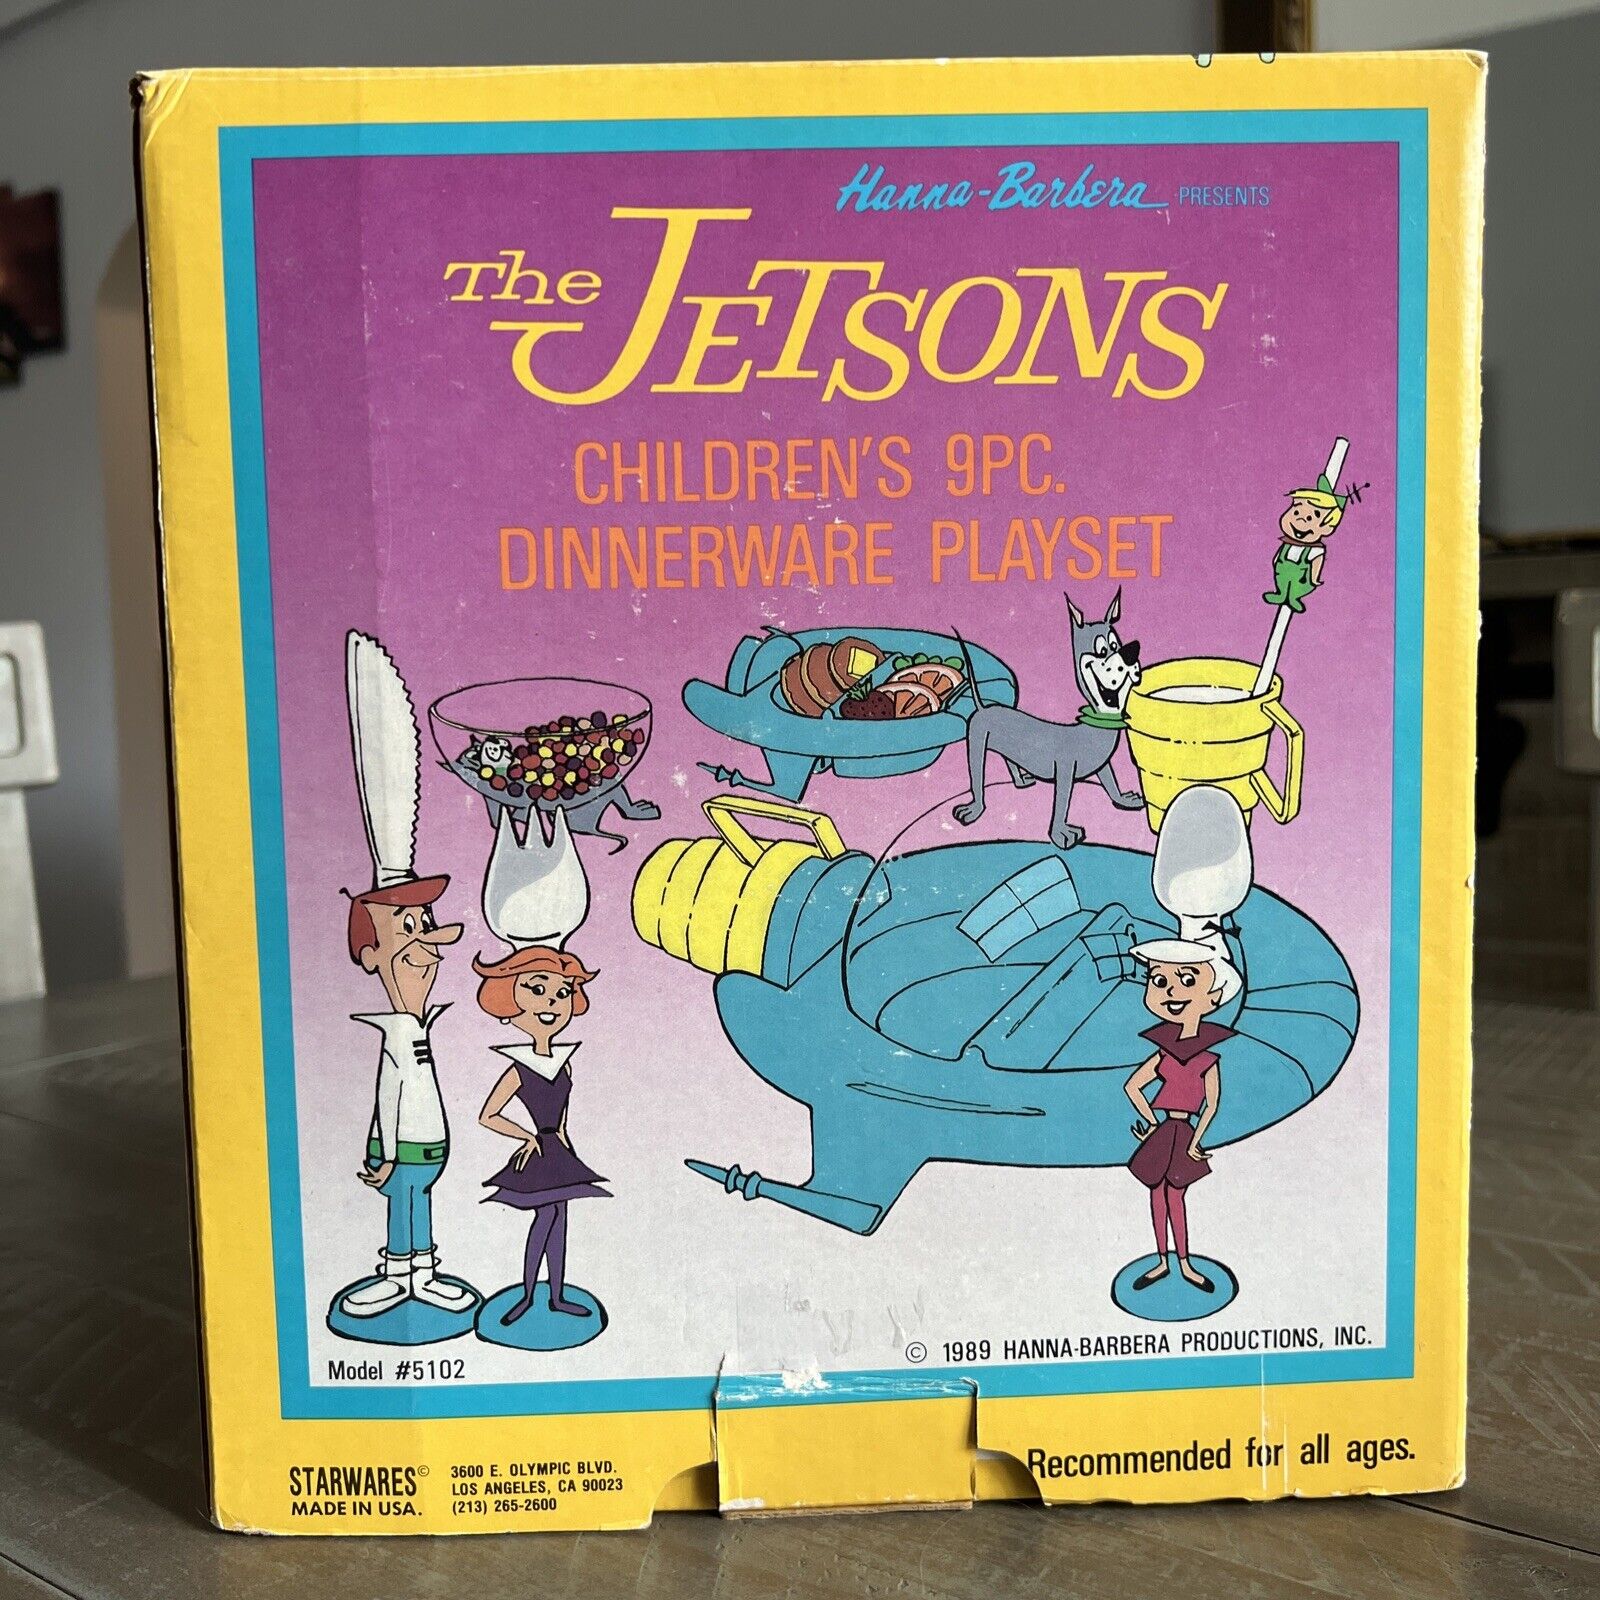 1989 Hanna Barbera The Jetsons Dinnerware Playset model # 5102